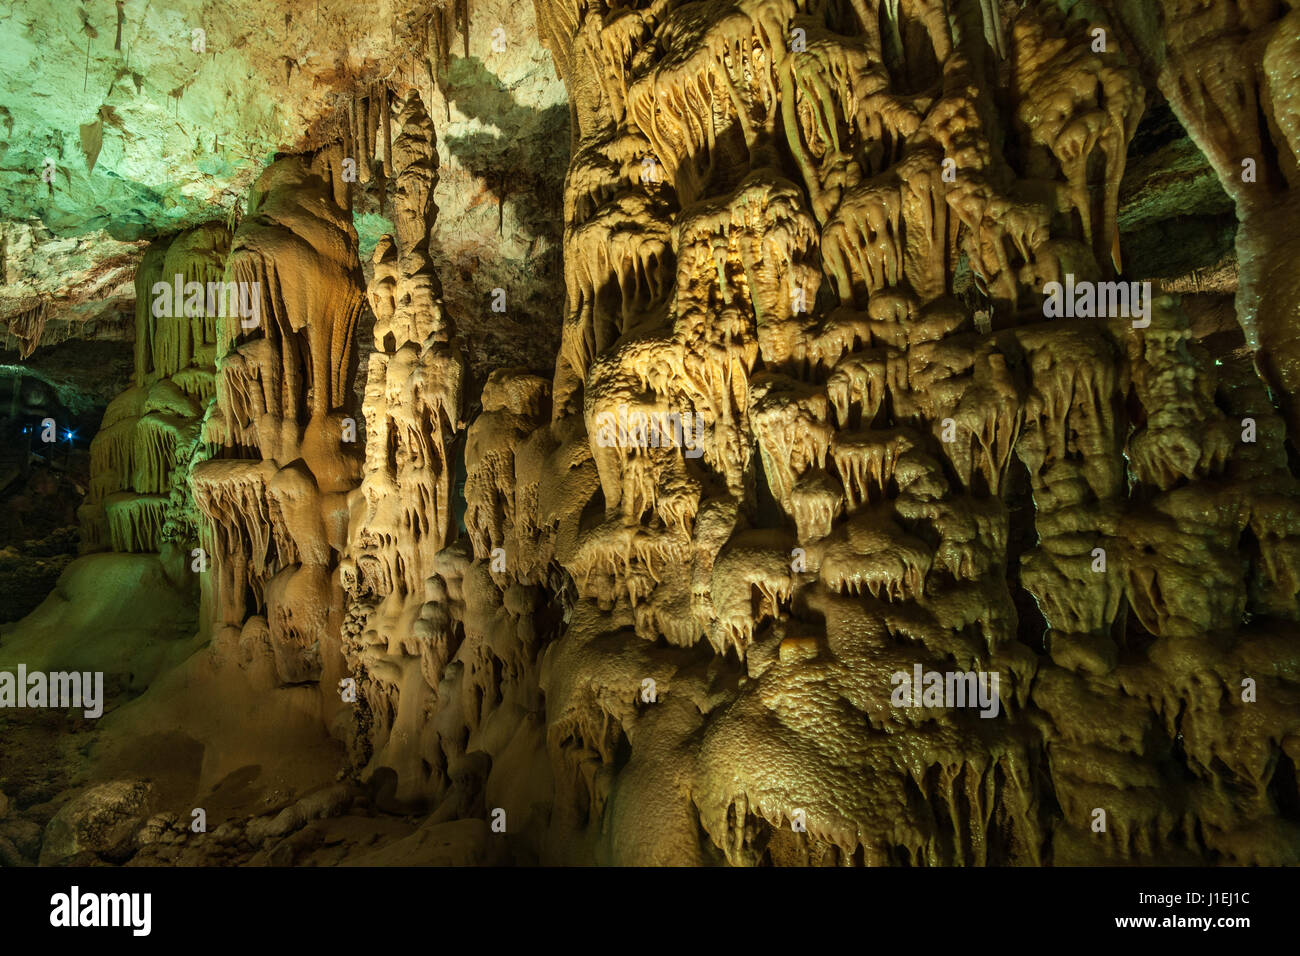 Avshalom Stalactites Cave, Soreq, Israel Stock Photo